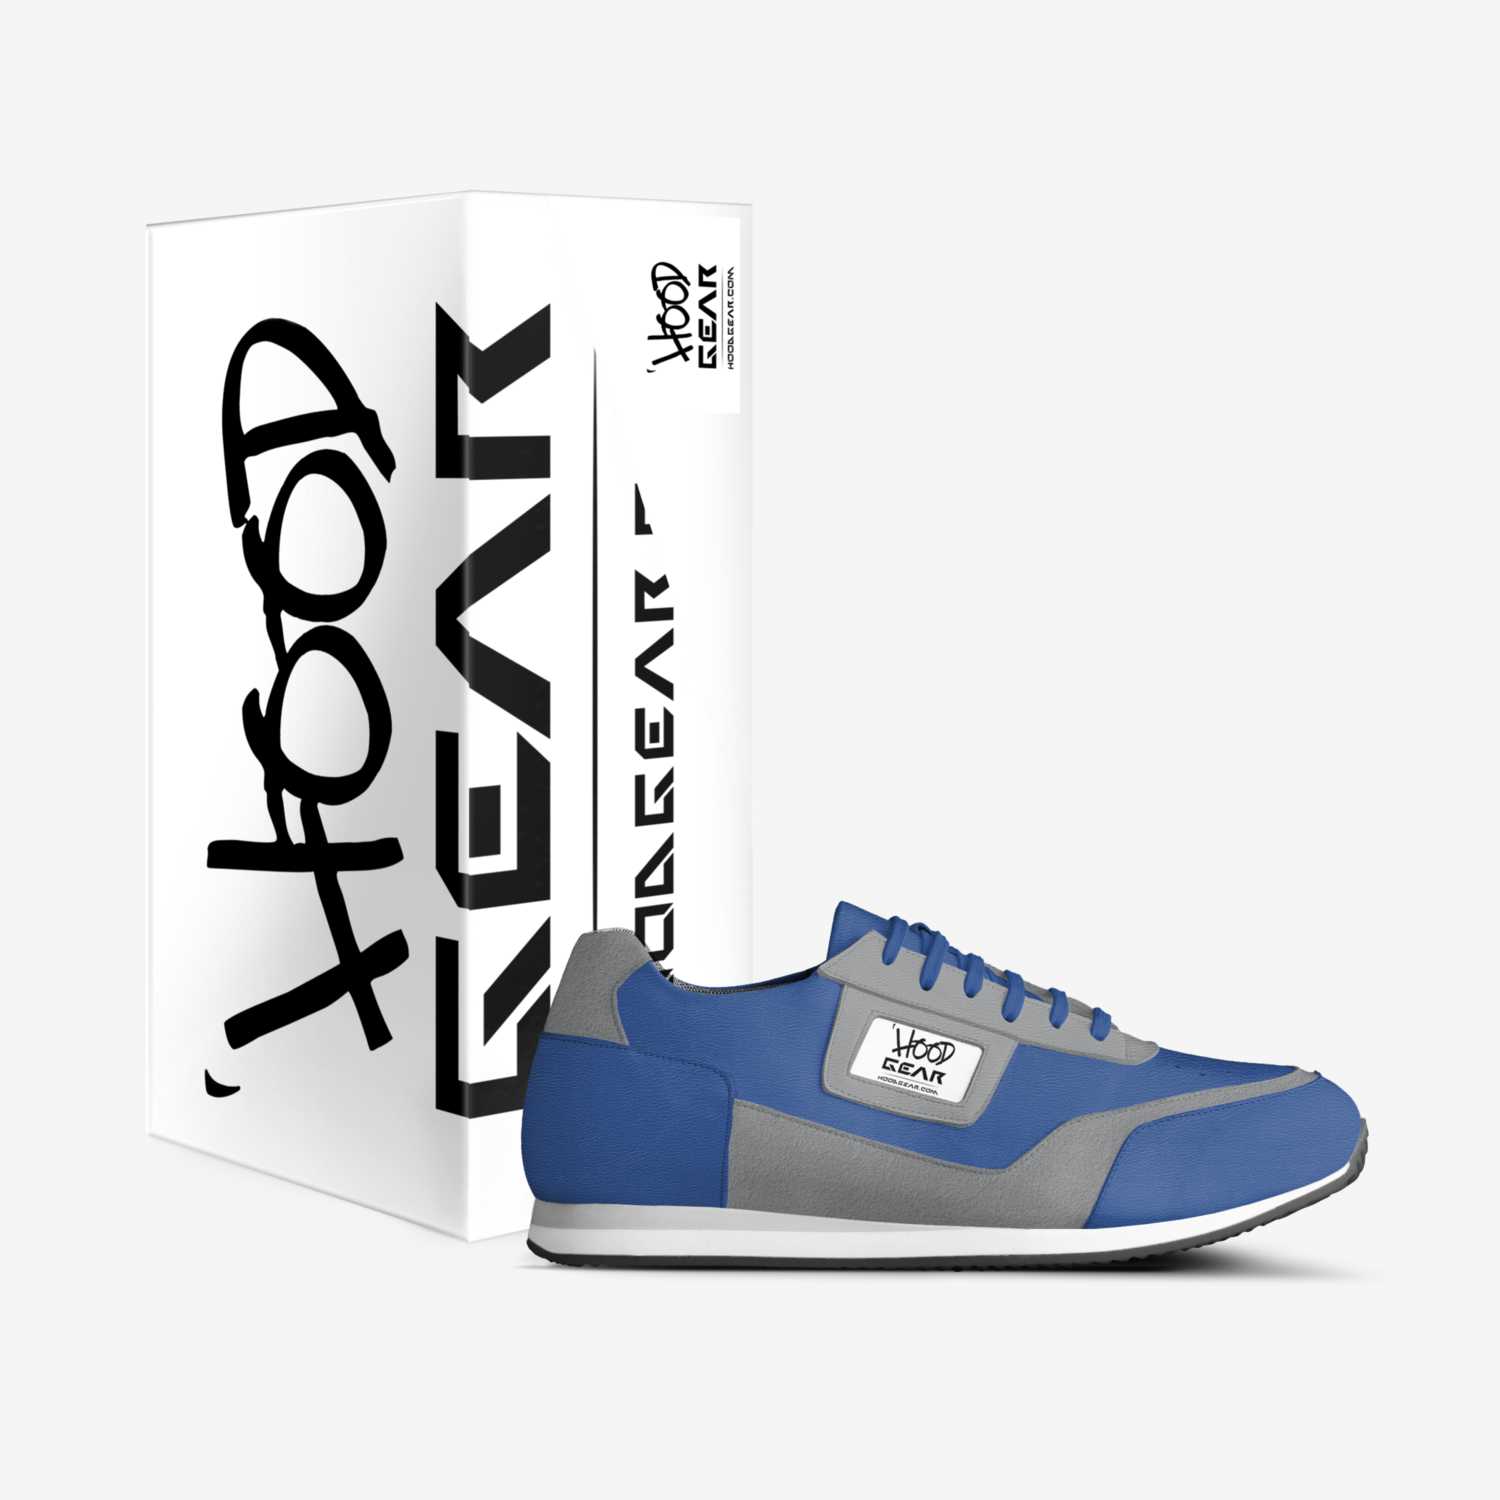 HOODGEAR3 custom made in Italy shoes by Ezeoma Obioha | Box view